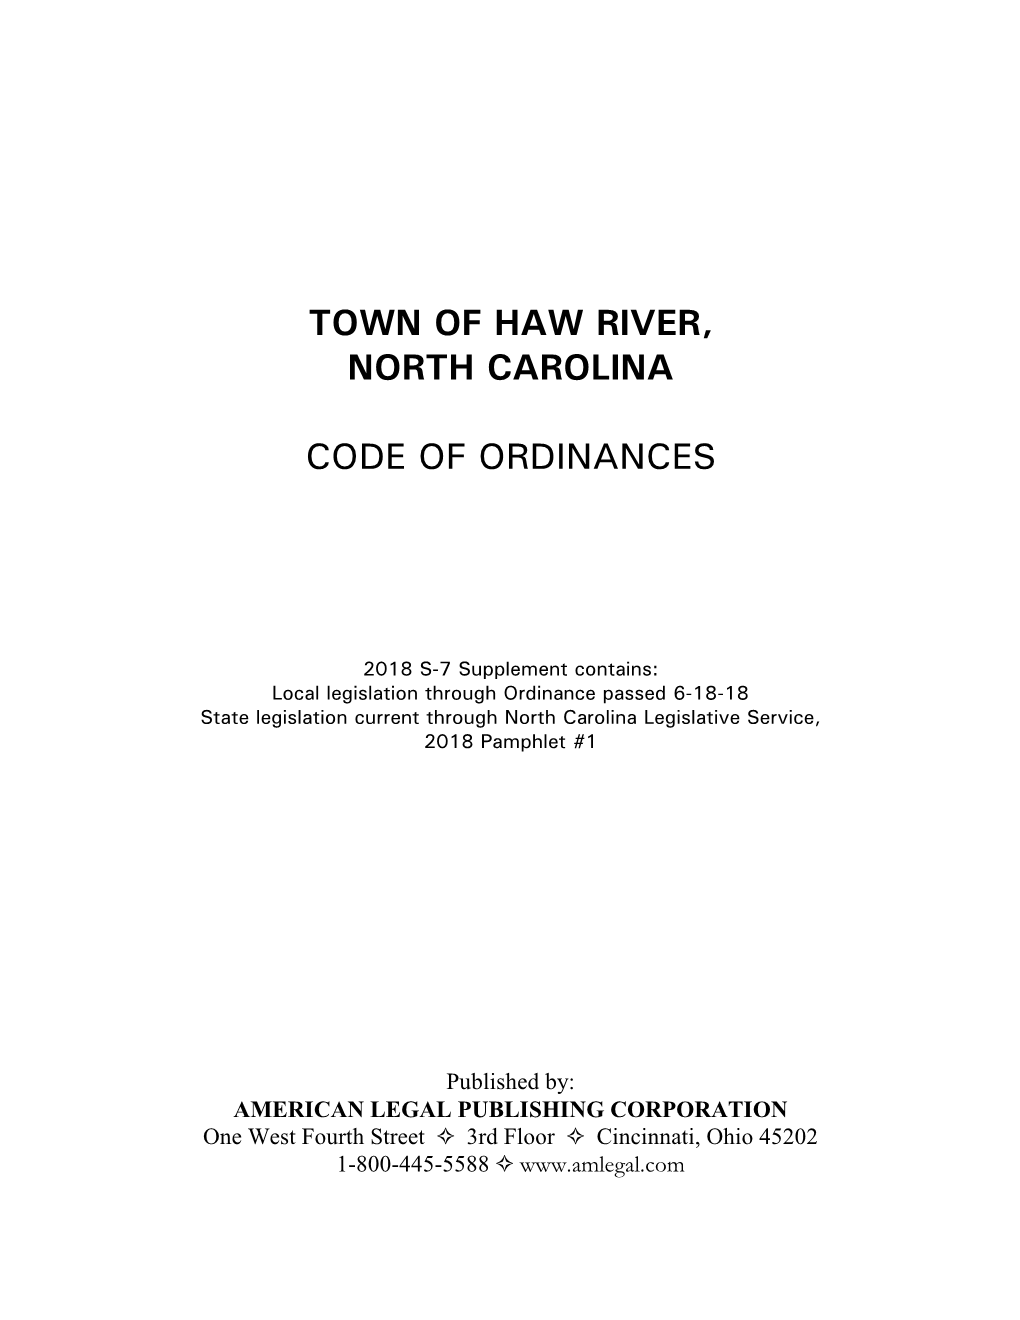 Town of Haw River, North Carolina Code of Ordinances